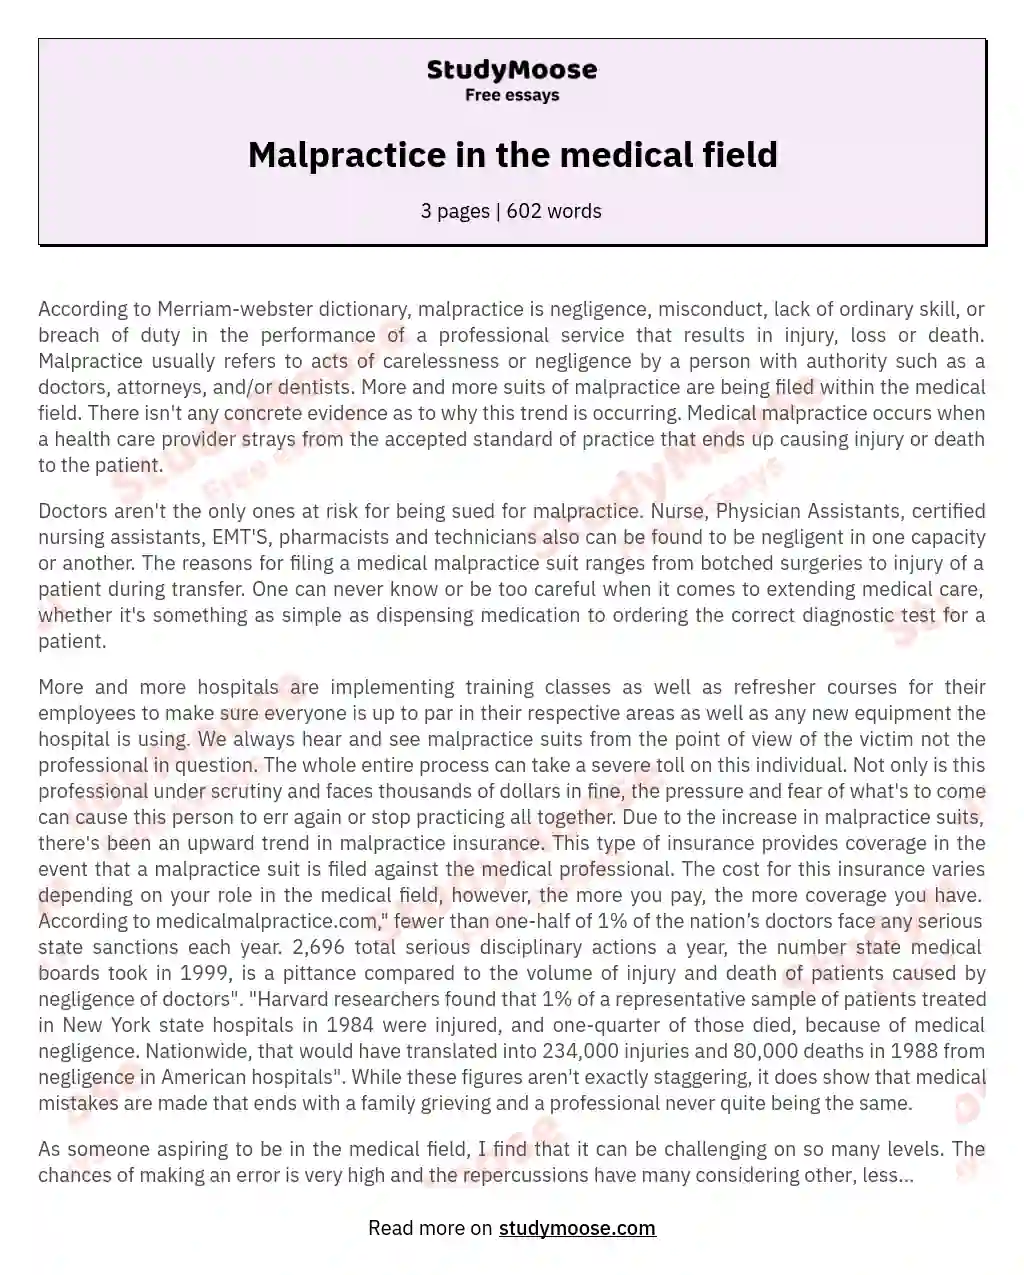 Malpractice in the medical field essay